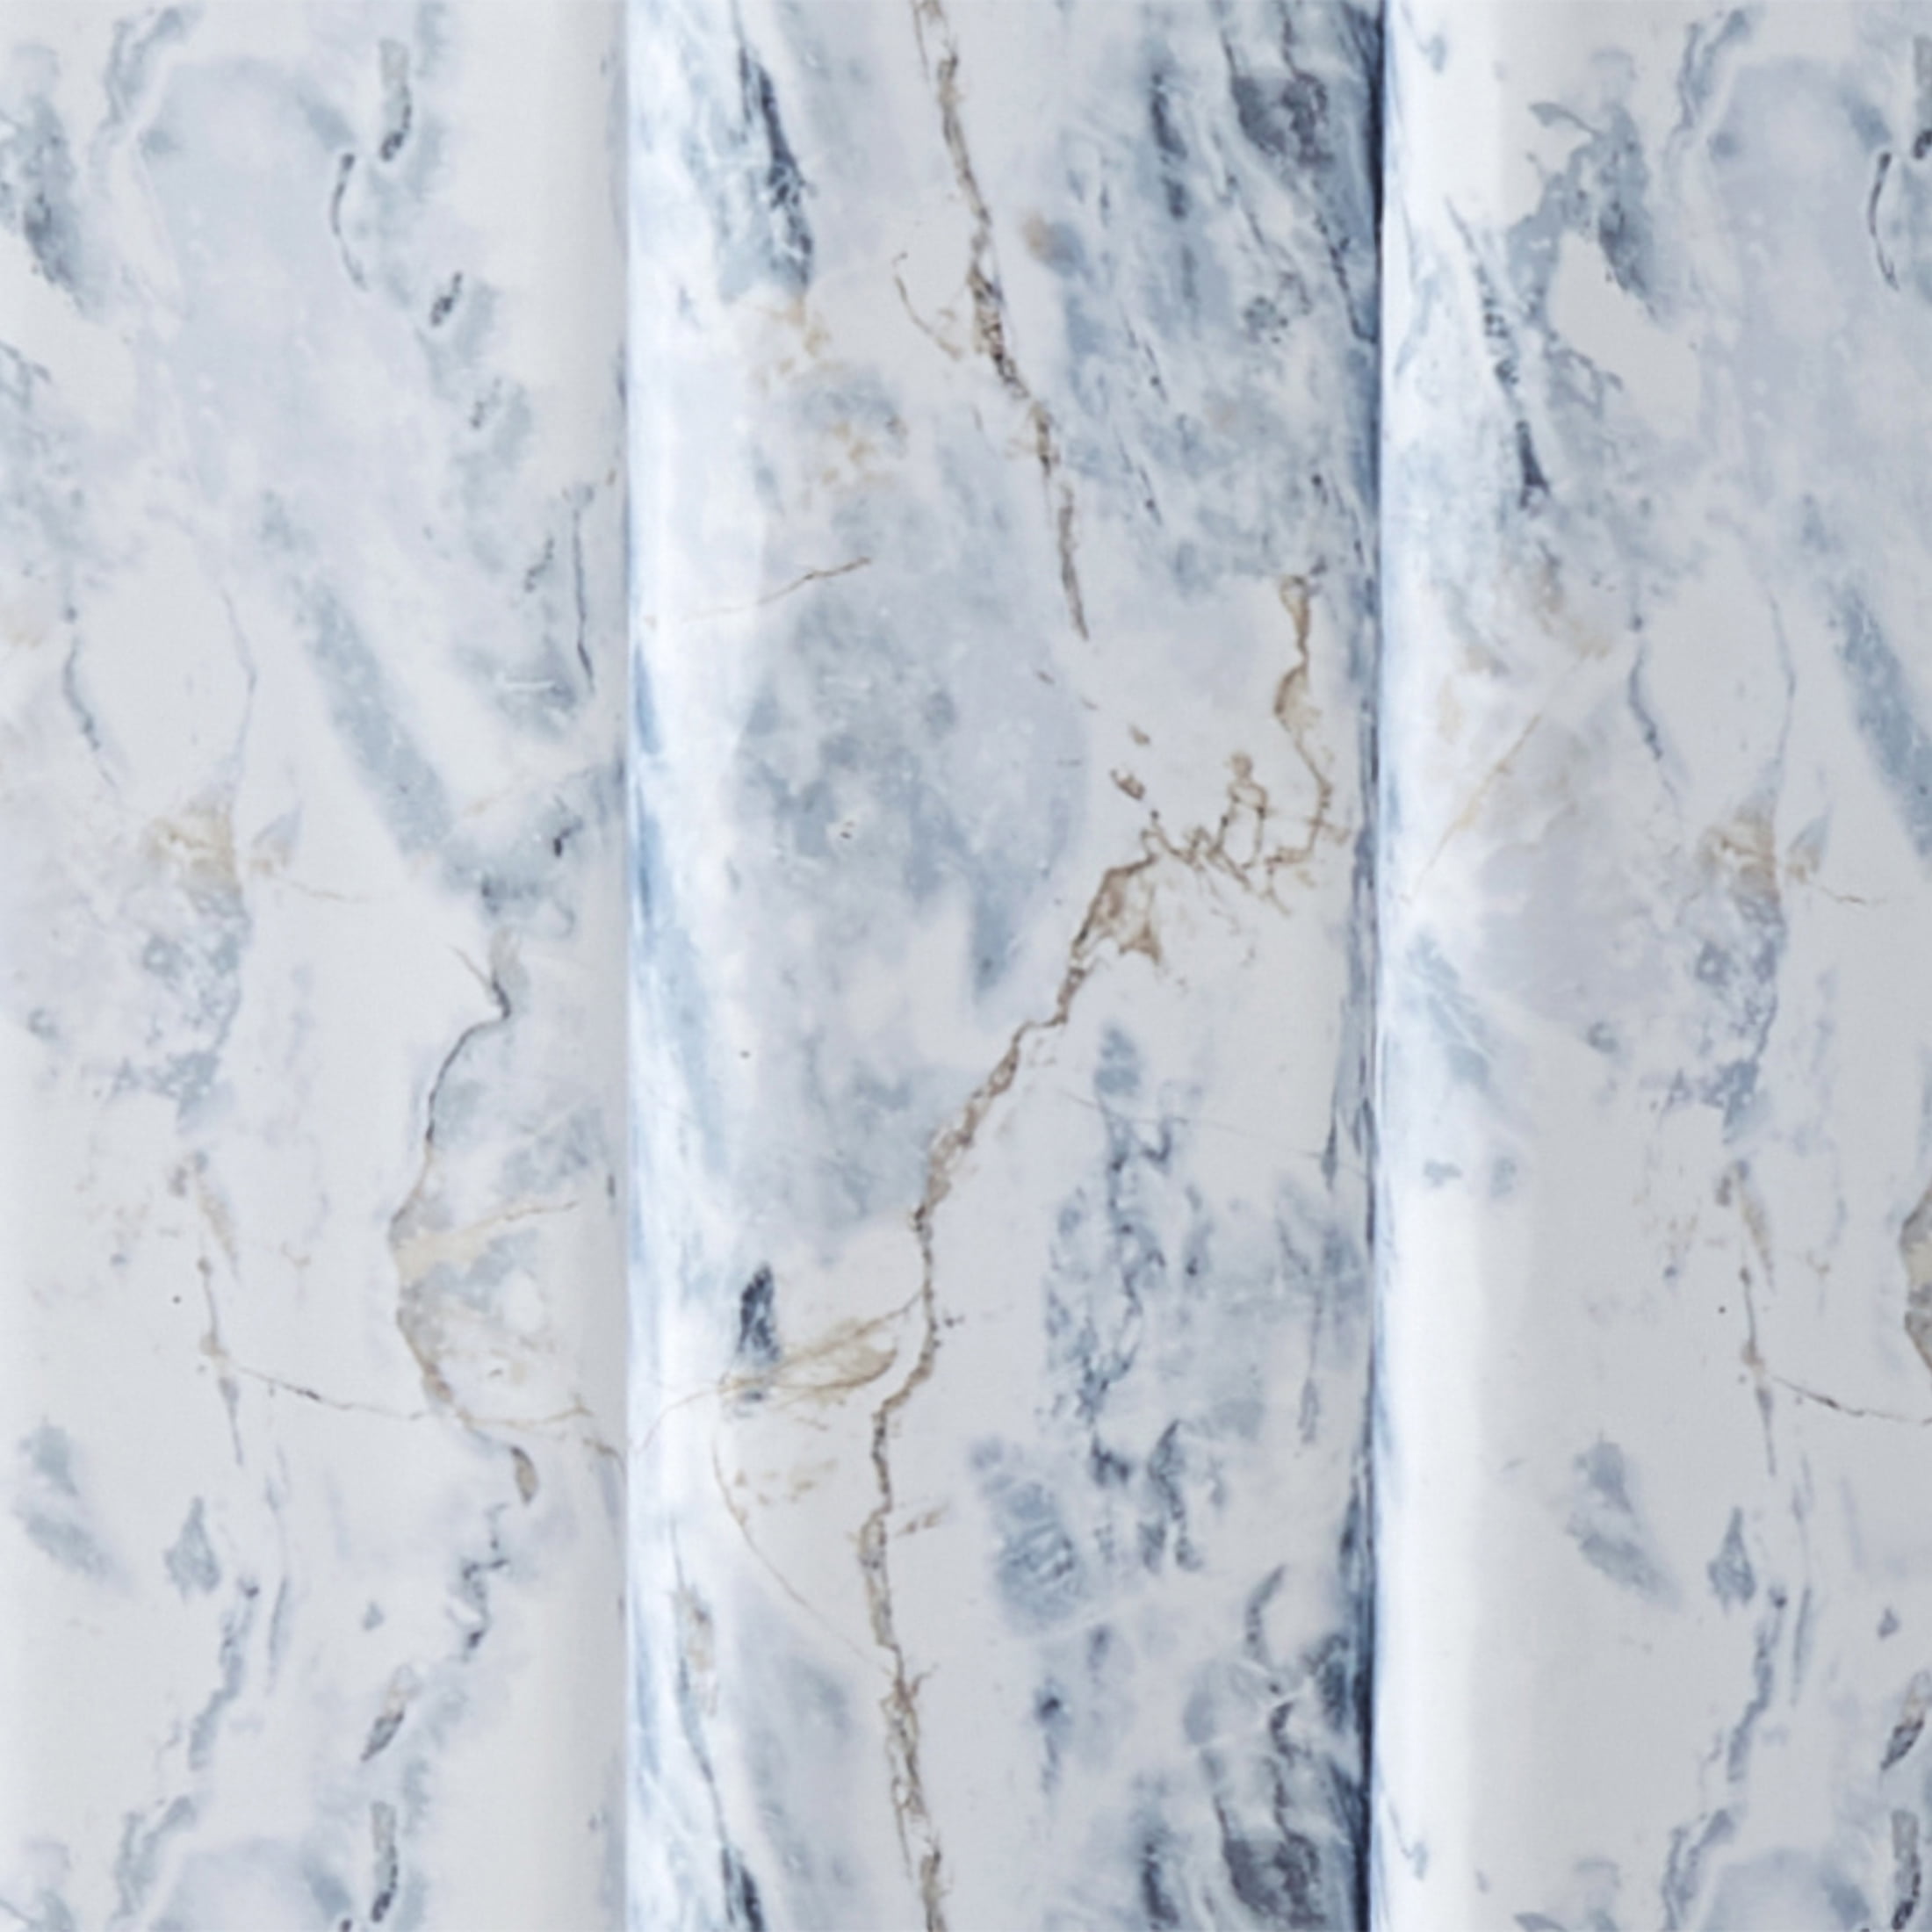  AVSMGP Marble Shower Curtain, Blue Marble Shower